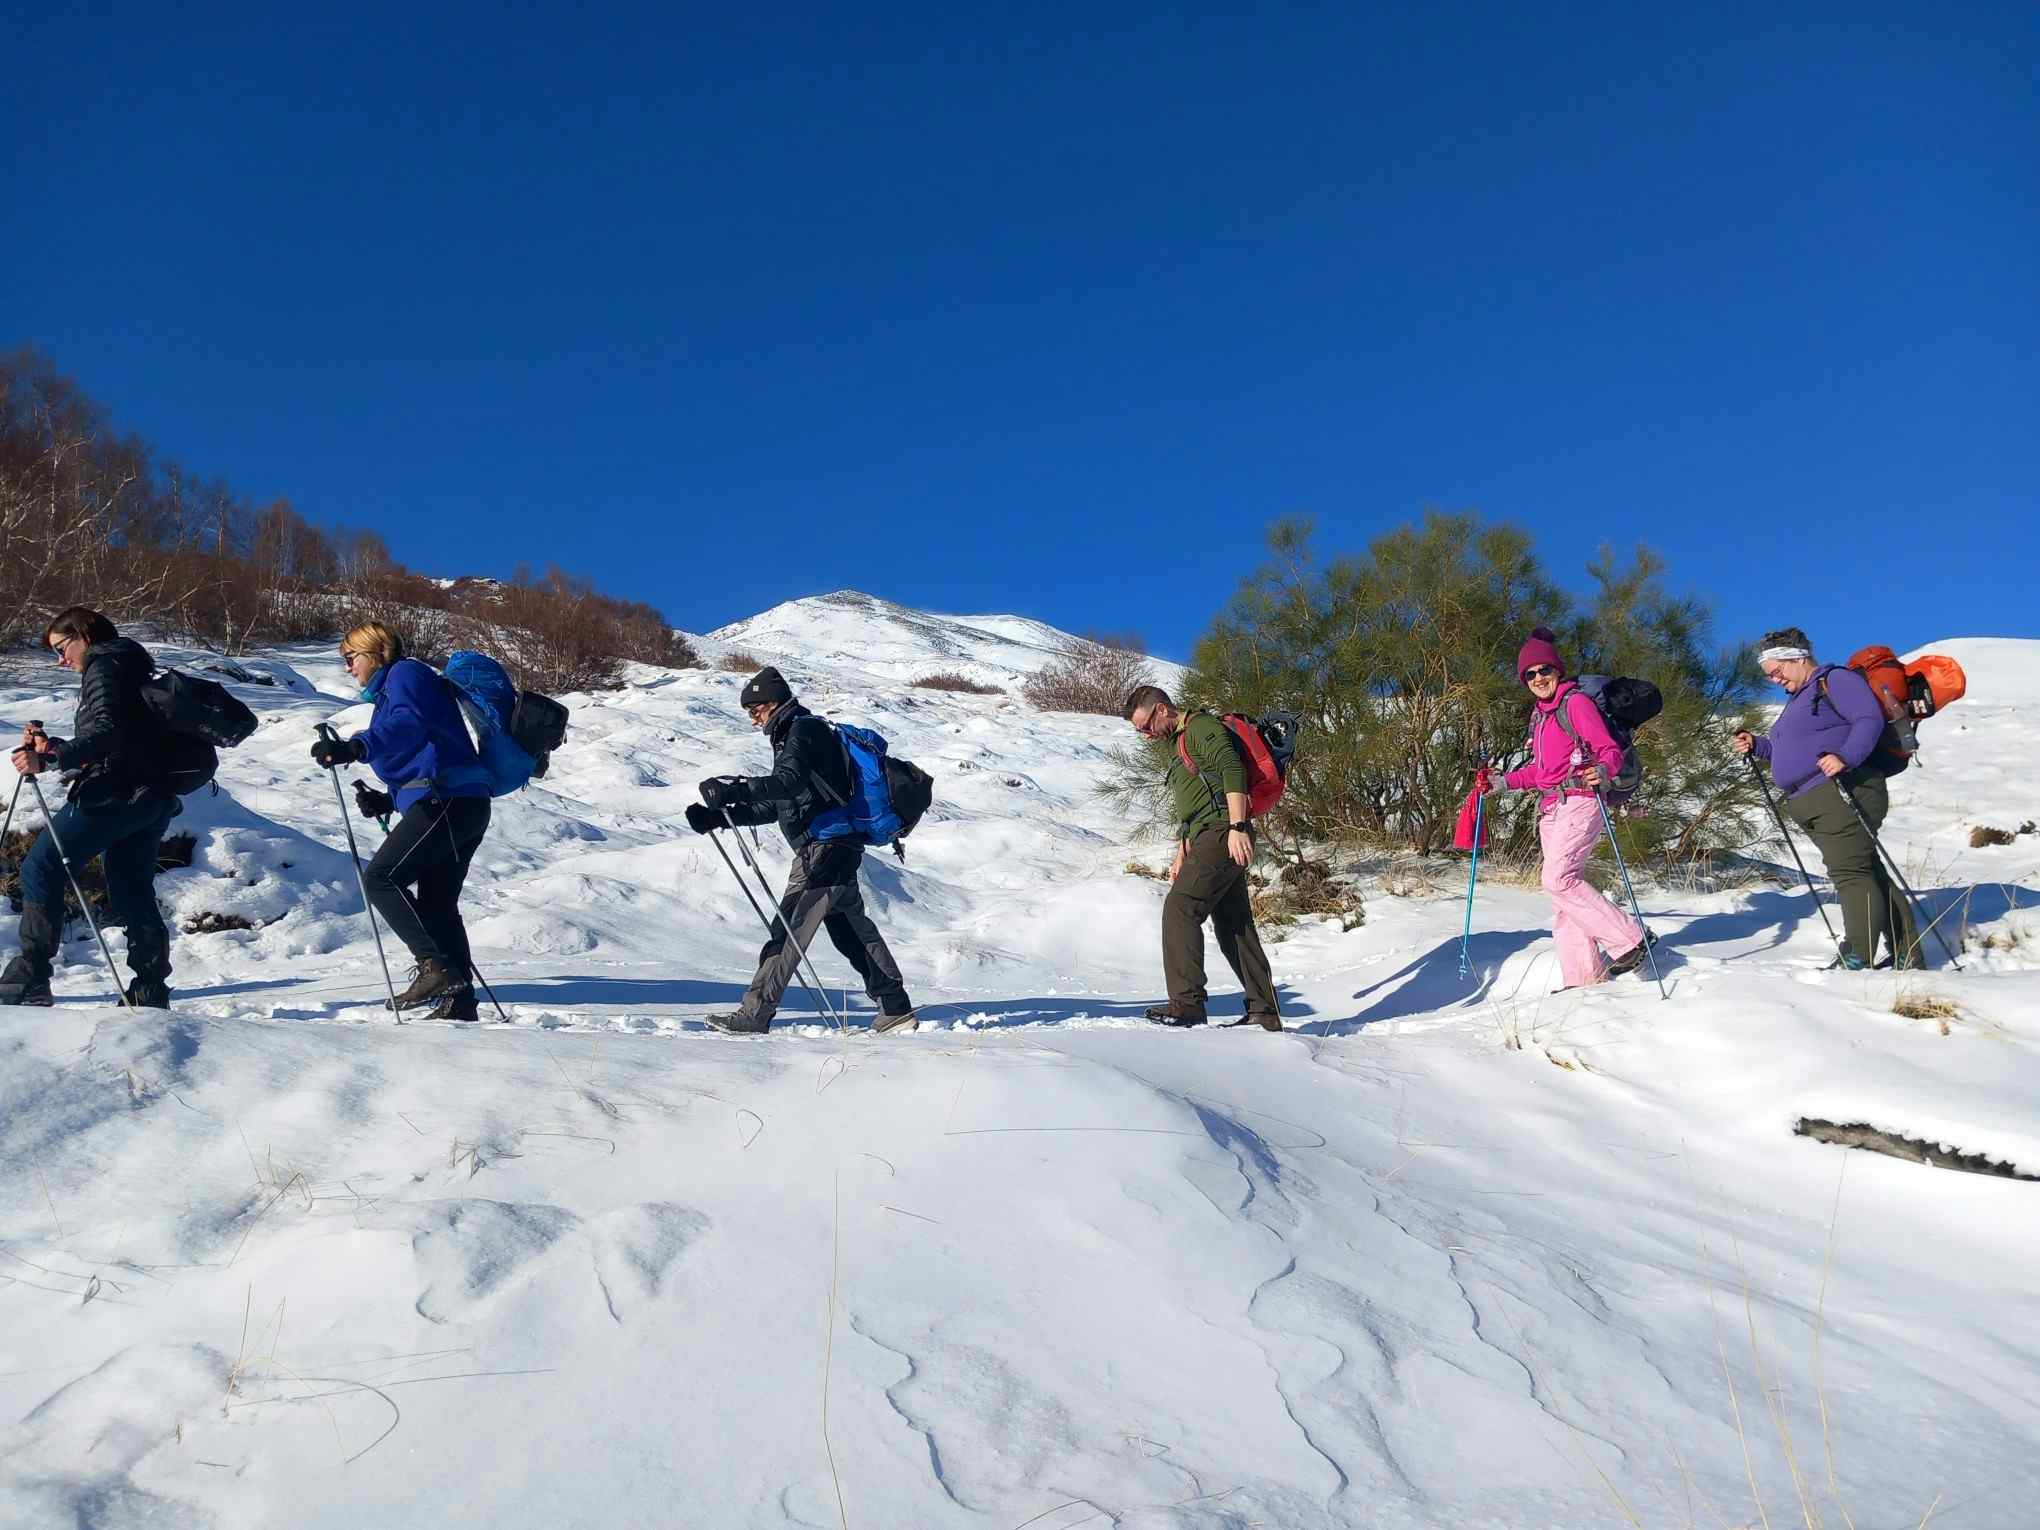 Hiking snowy Mount Etna, Sicily, Italy. Photo: Host/Mandala Tours